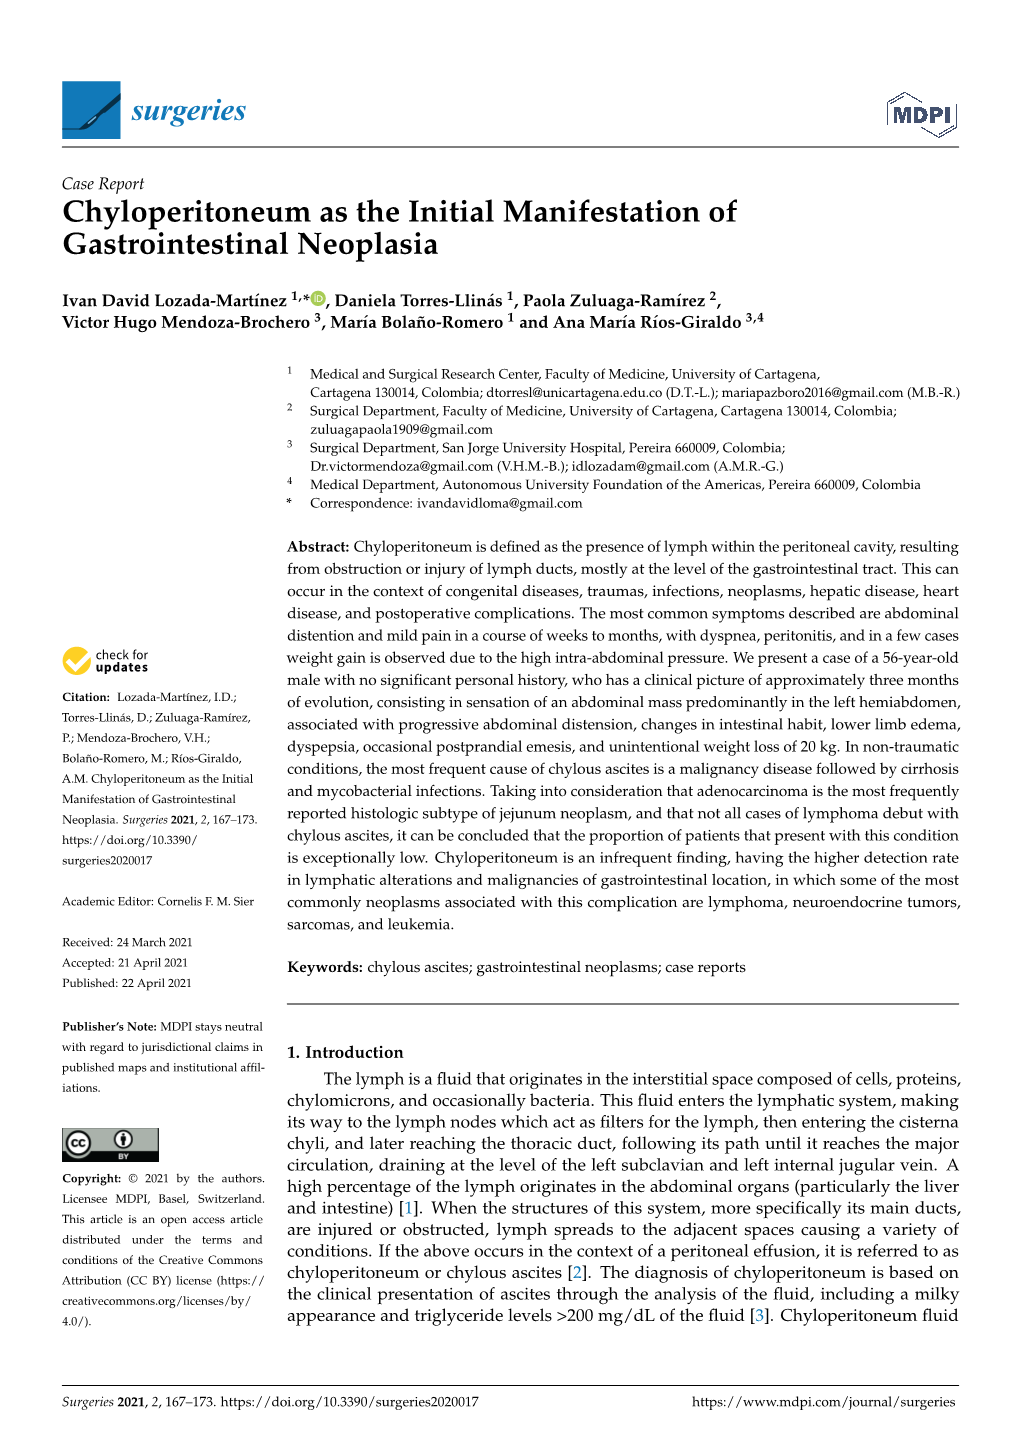 Chyloperitoneum As the Initial Manifestation of Gastrointestinal Neoplasia